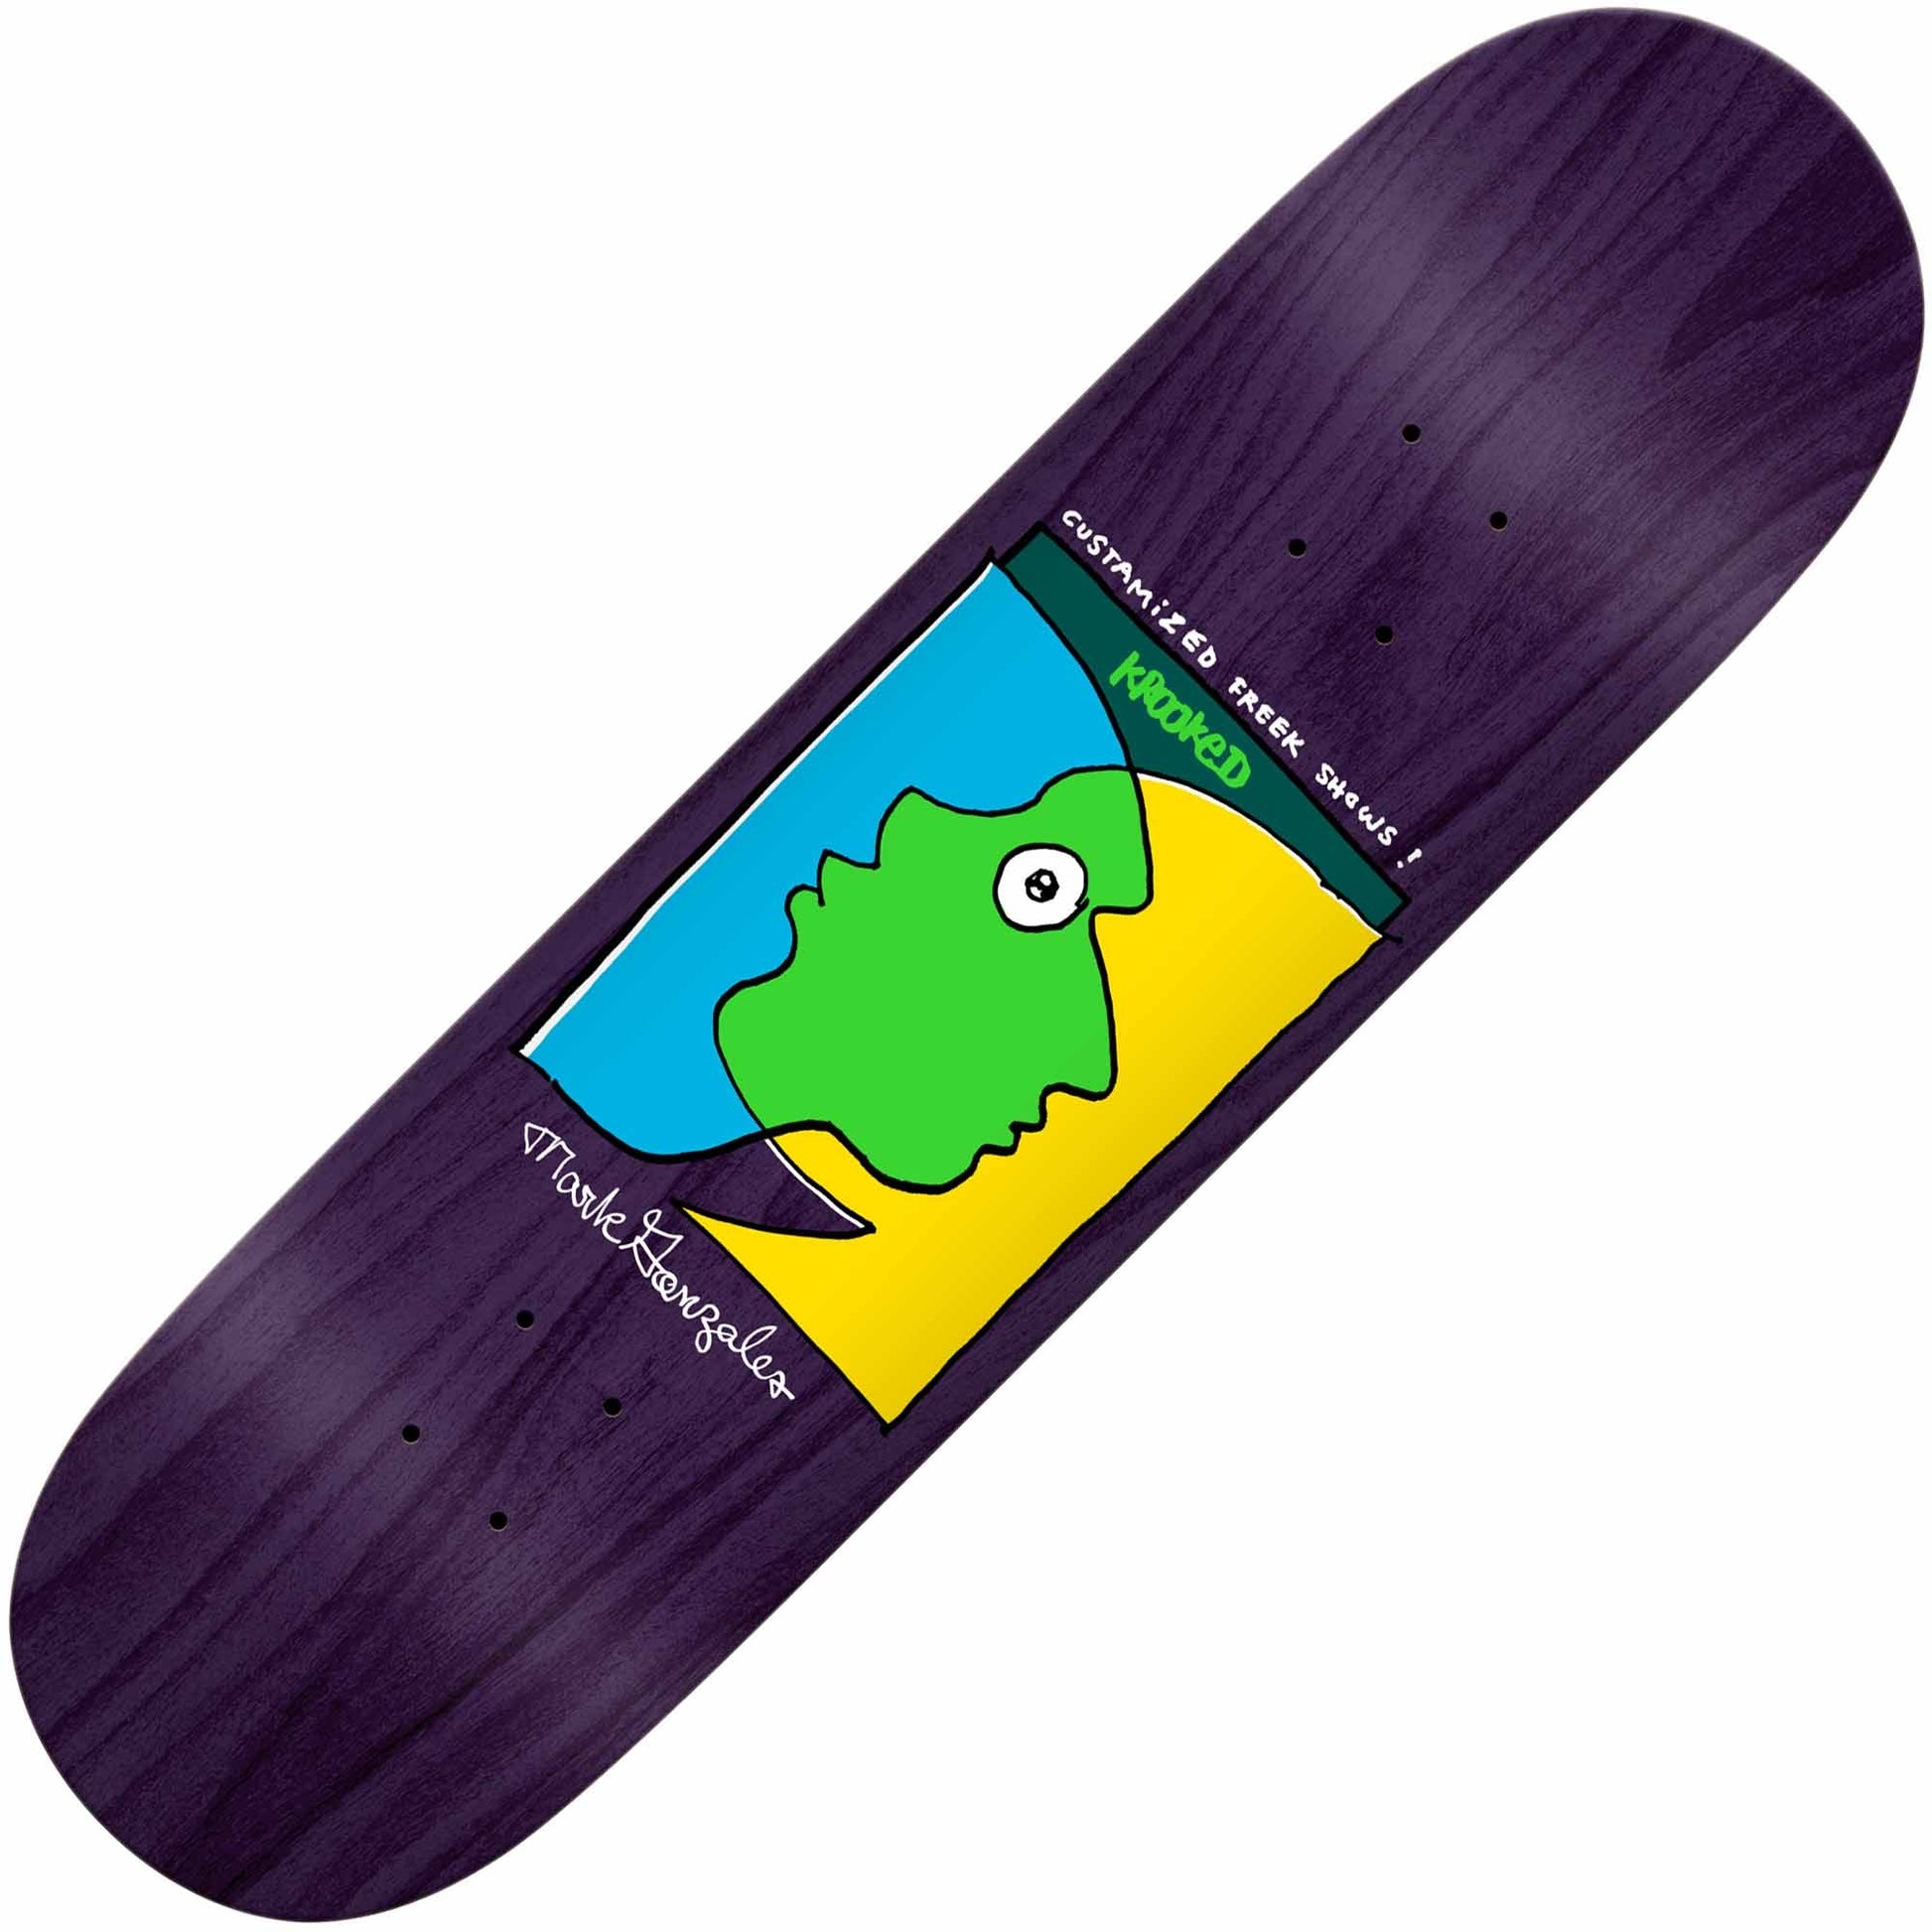 Krooked Gonz Freek Show Deck (8.62”) - Tiki Room Skateboards - 1